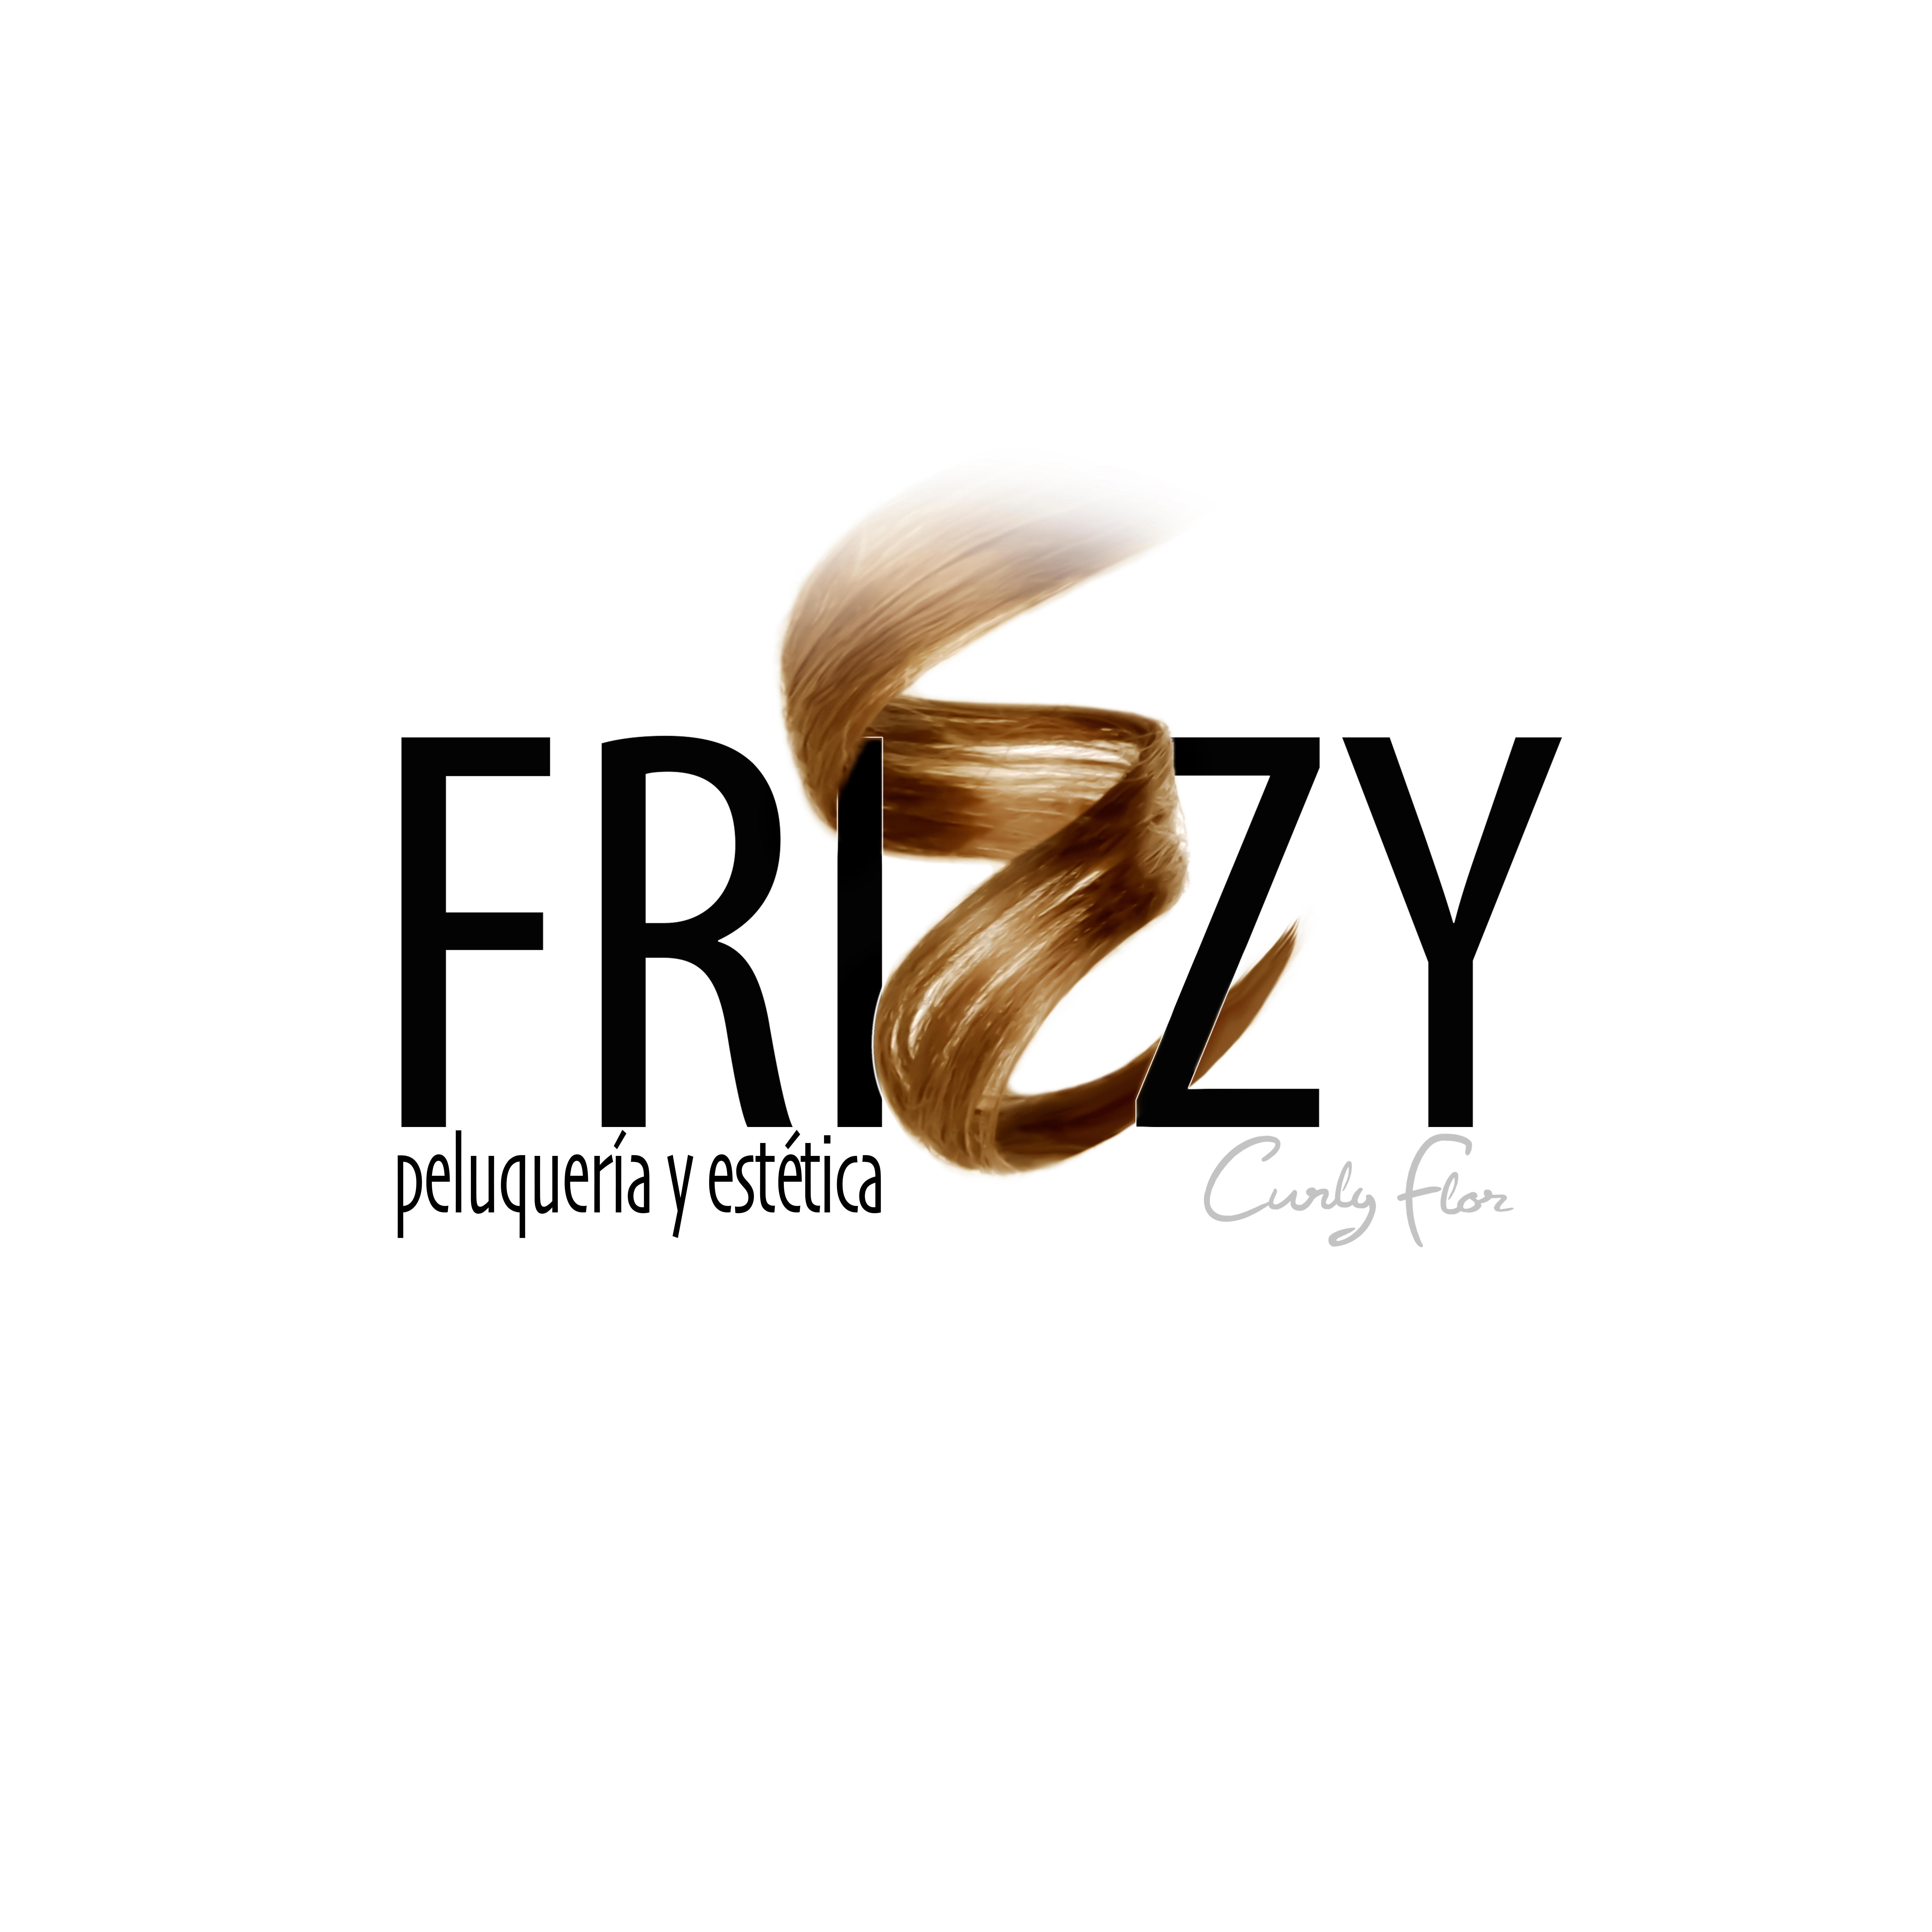 Frizzy Peluquería y Estética  La Curly Flor - Hair Salon - Jerez de la Frontera - 653 99 75 77 Spain | ShowMeLocal.com